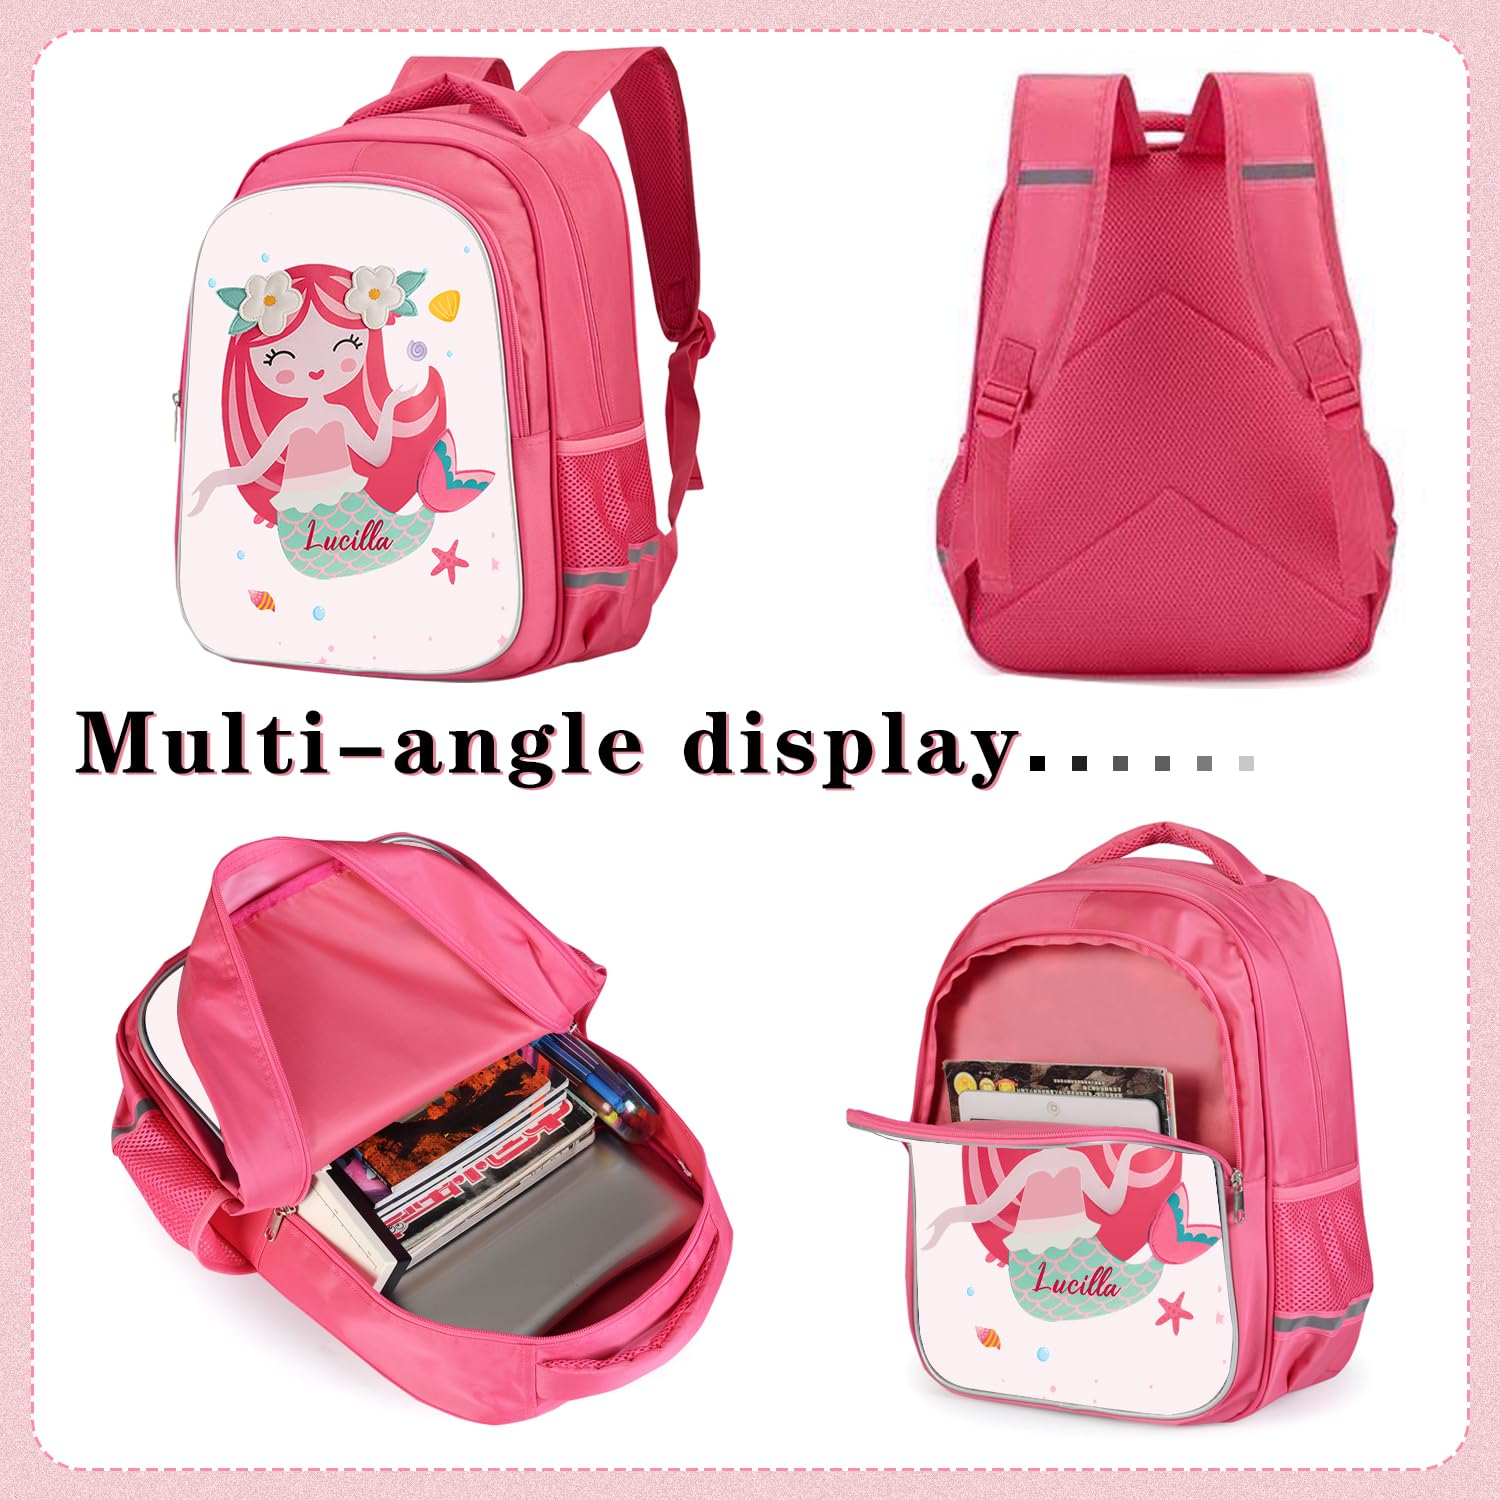 Luxladis Personalized Toddler Backpack with Name Custom Photo Kids School Dinosaur Backpack for Girls Boys Cute Preschool Backpack (2-Pink backpack)